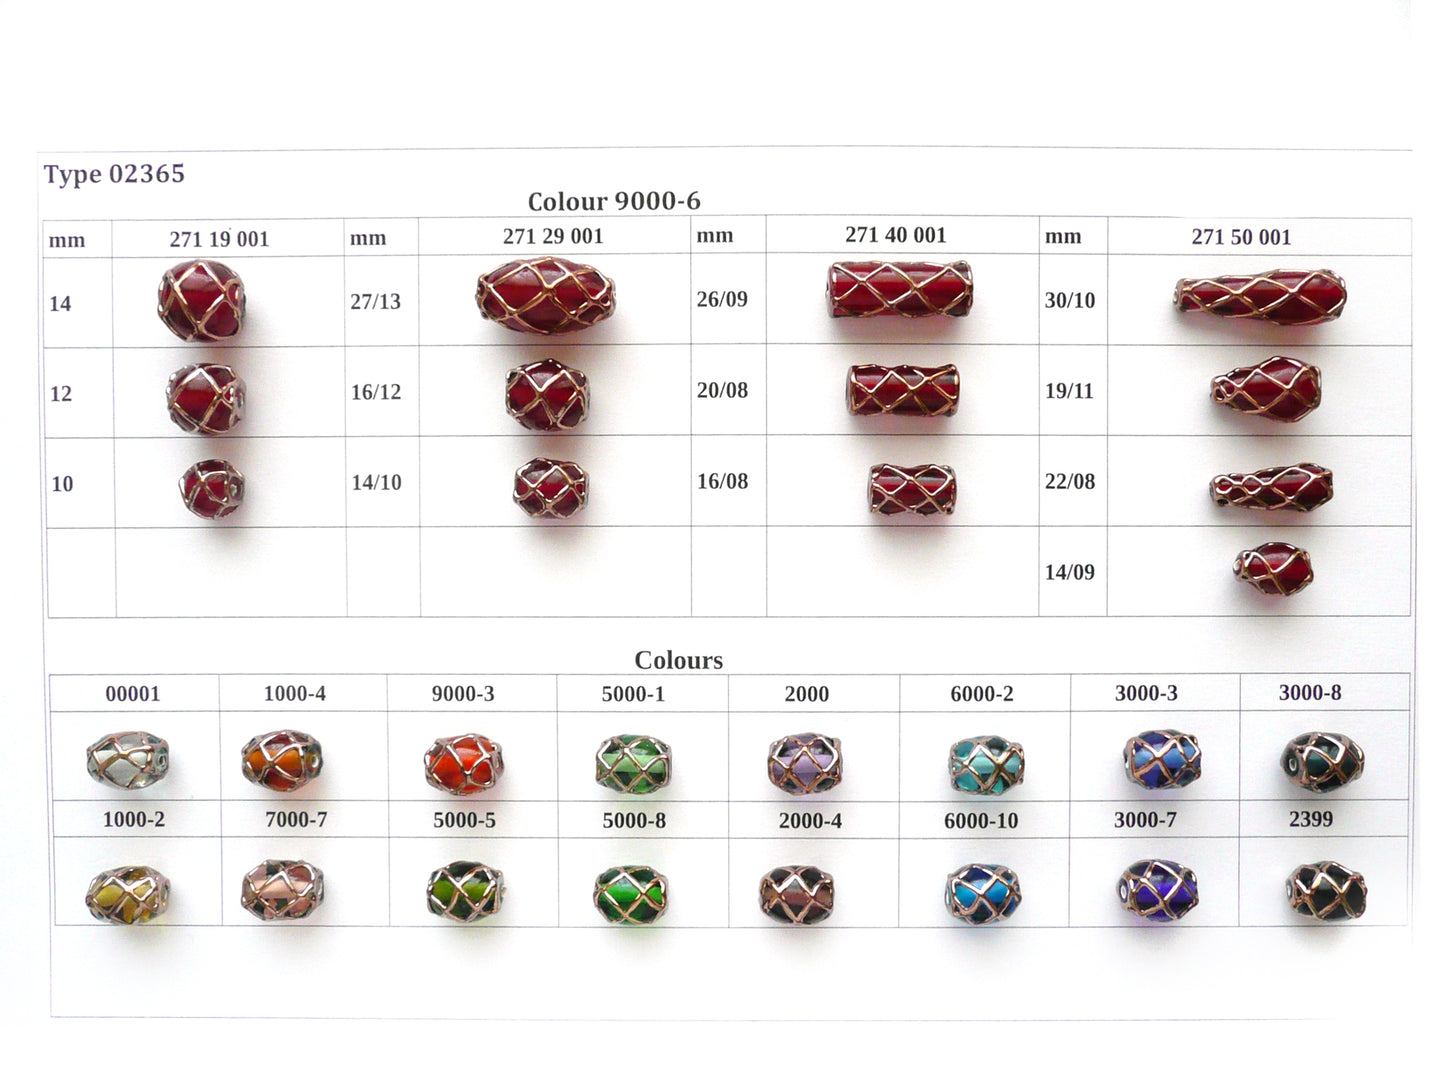 30 pcs Lampwork Beads 2365 / Round (271-19-001), Handmade, Preciosa Glass, Czech Republic